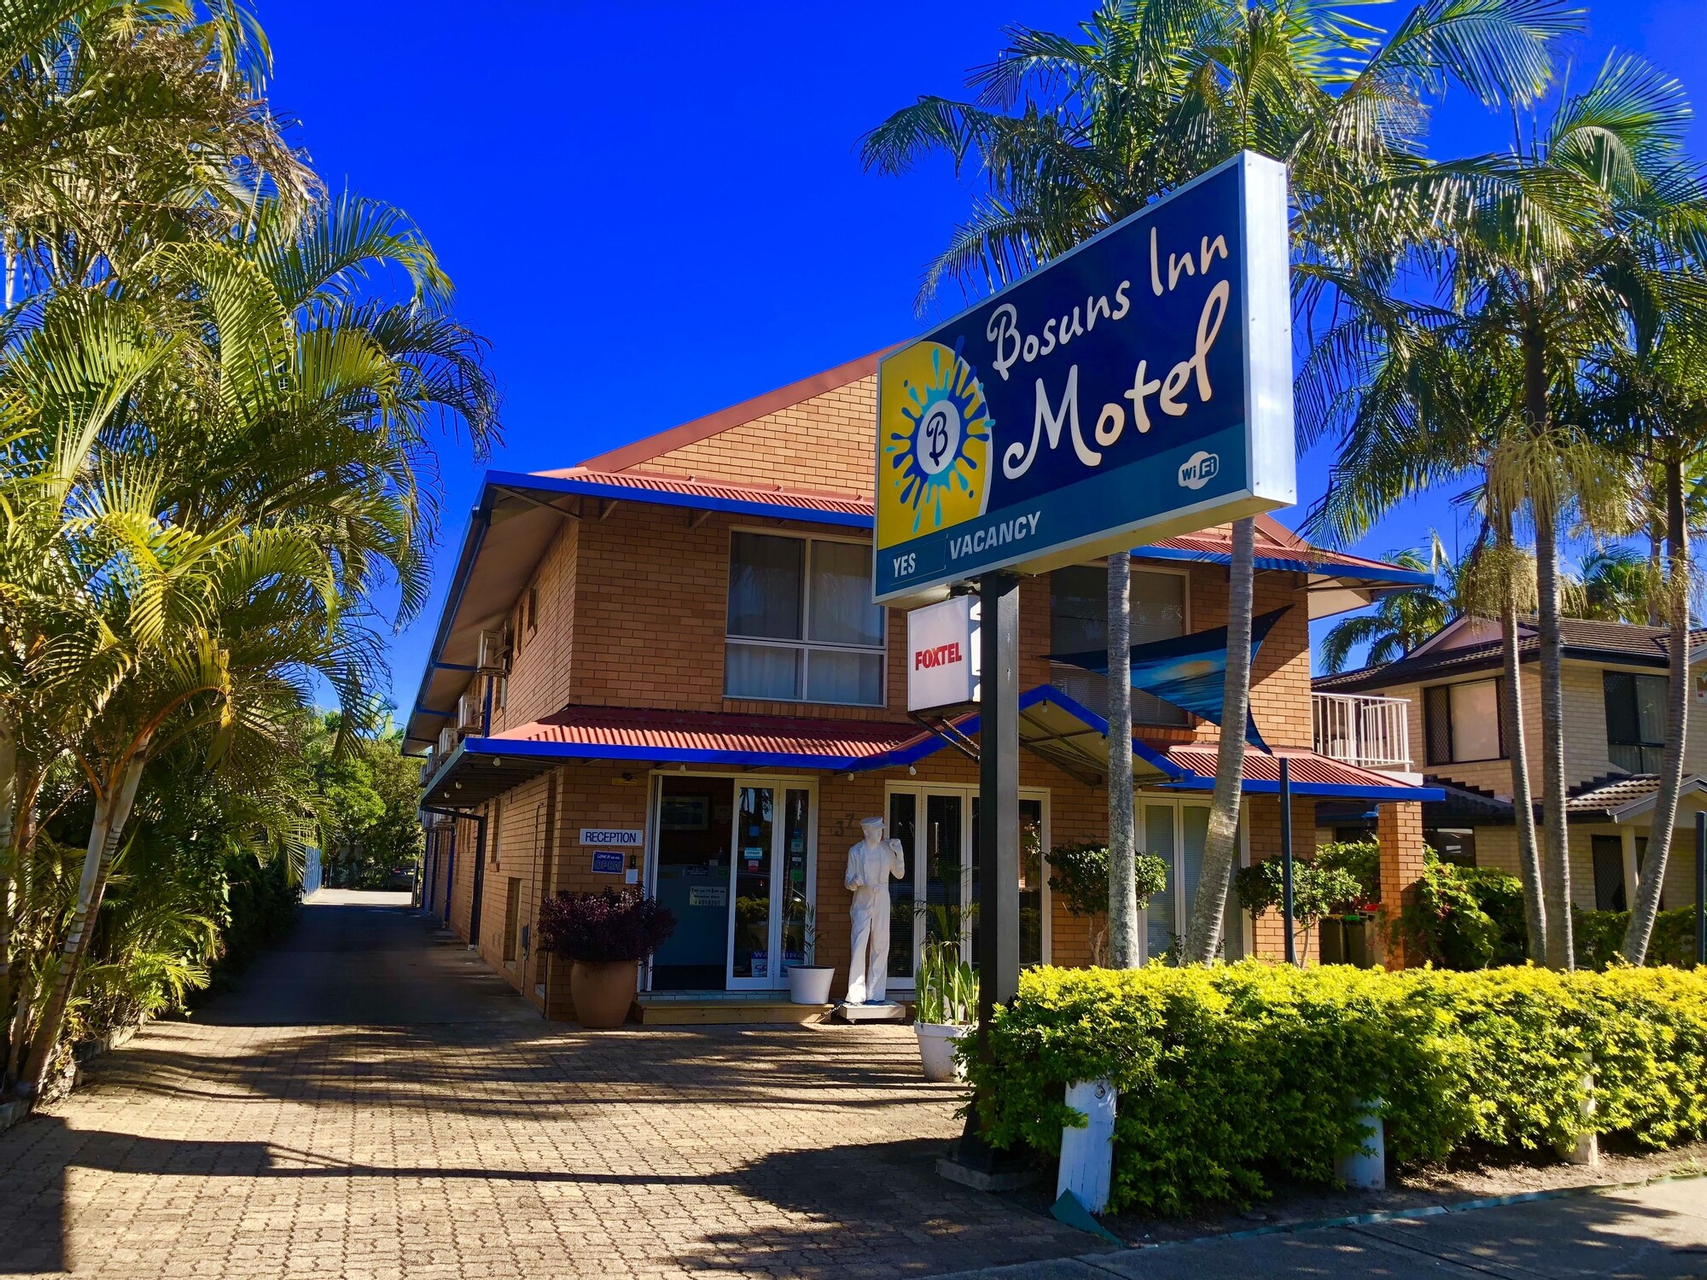 Exterior & Views 1, Bosuns Inn Motel, Coffs Harbour - Pt A